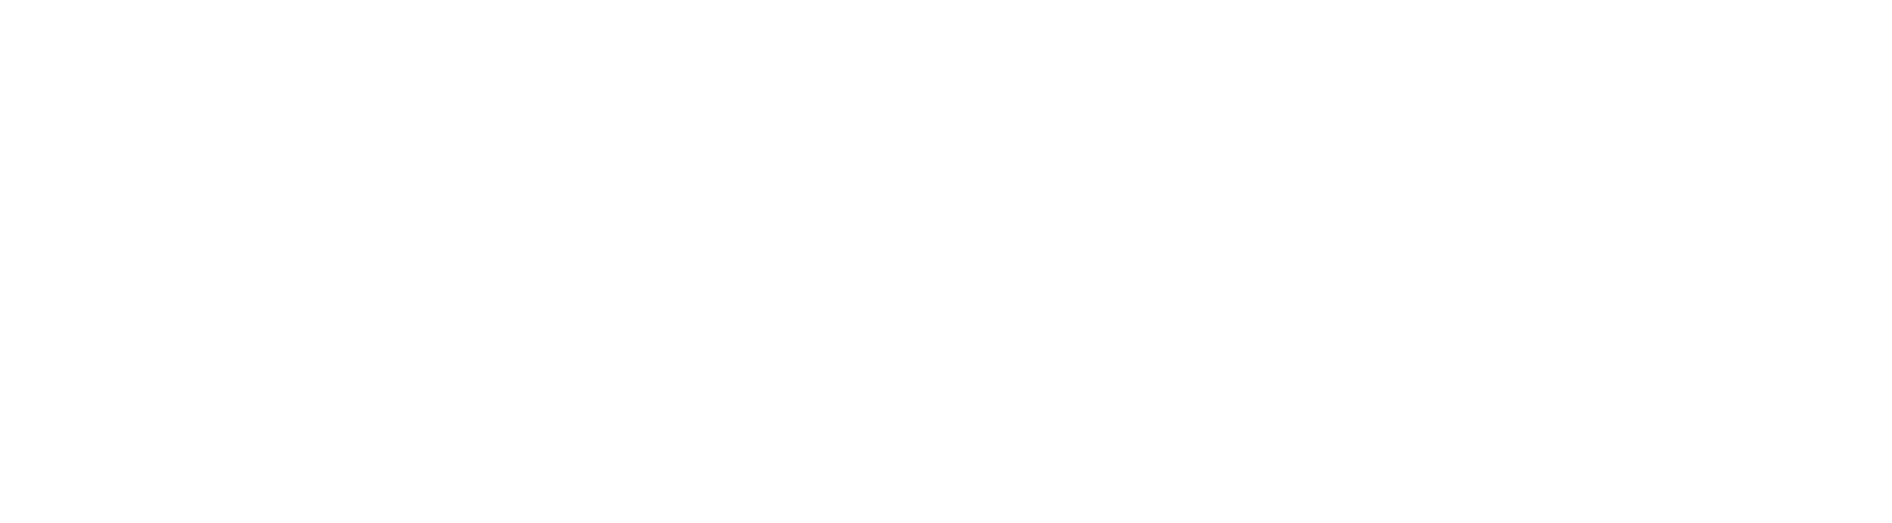 OKR Framework